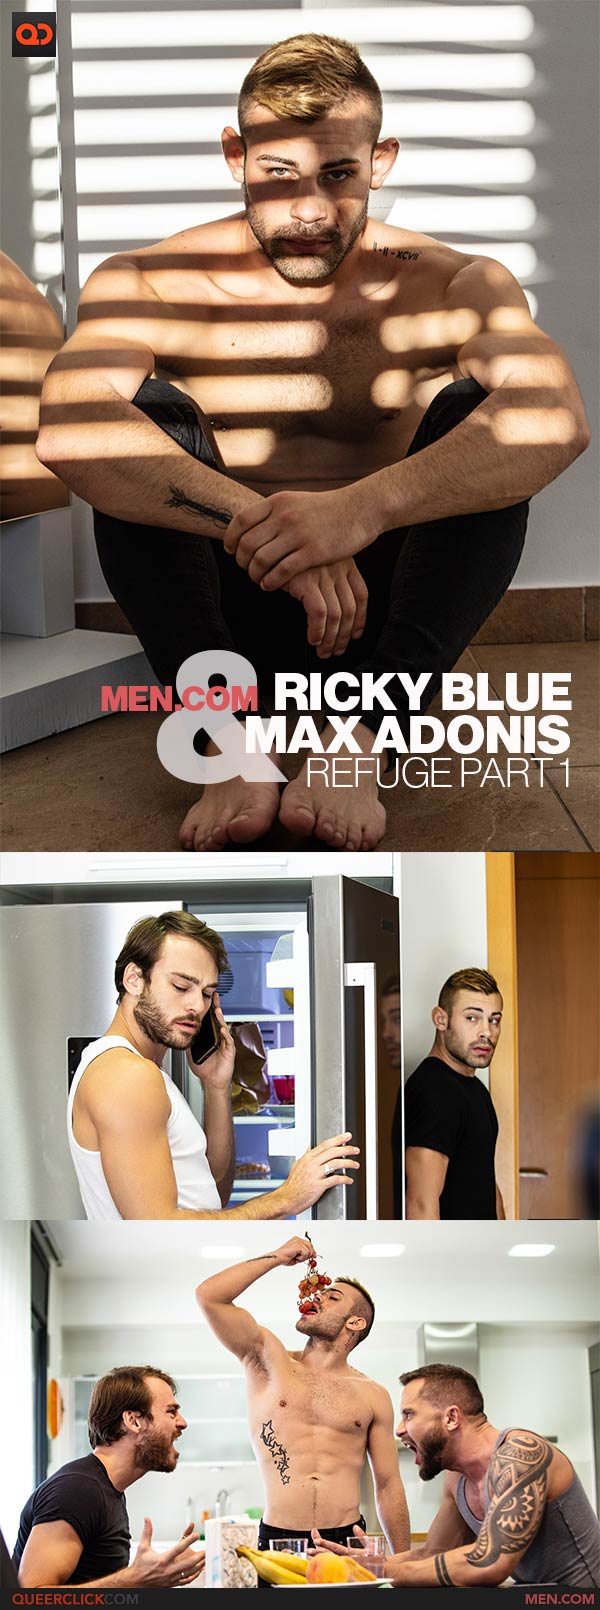 Men.com: Max Adonis and Ricky Blue